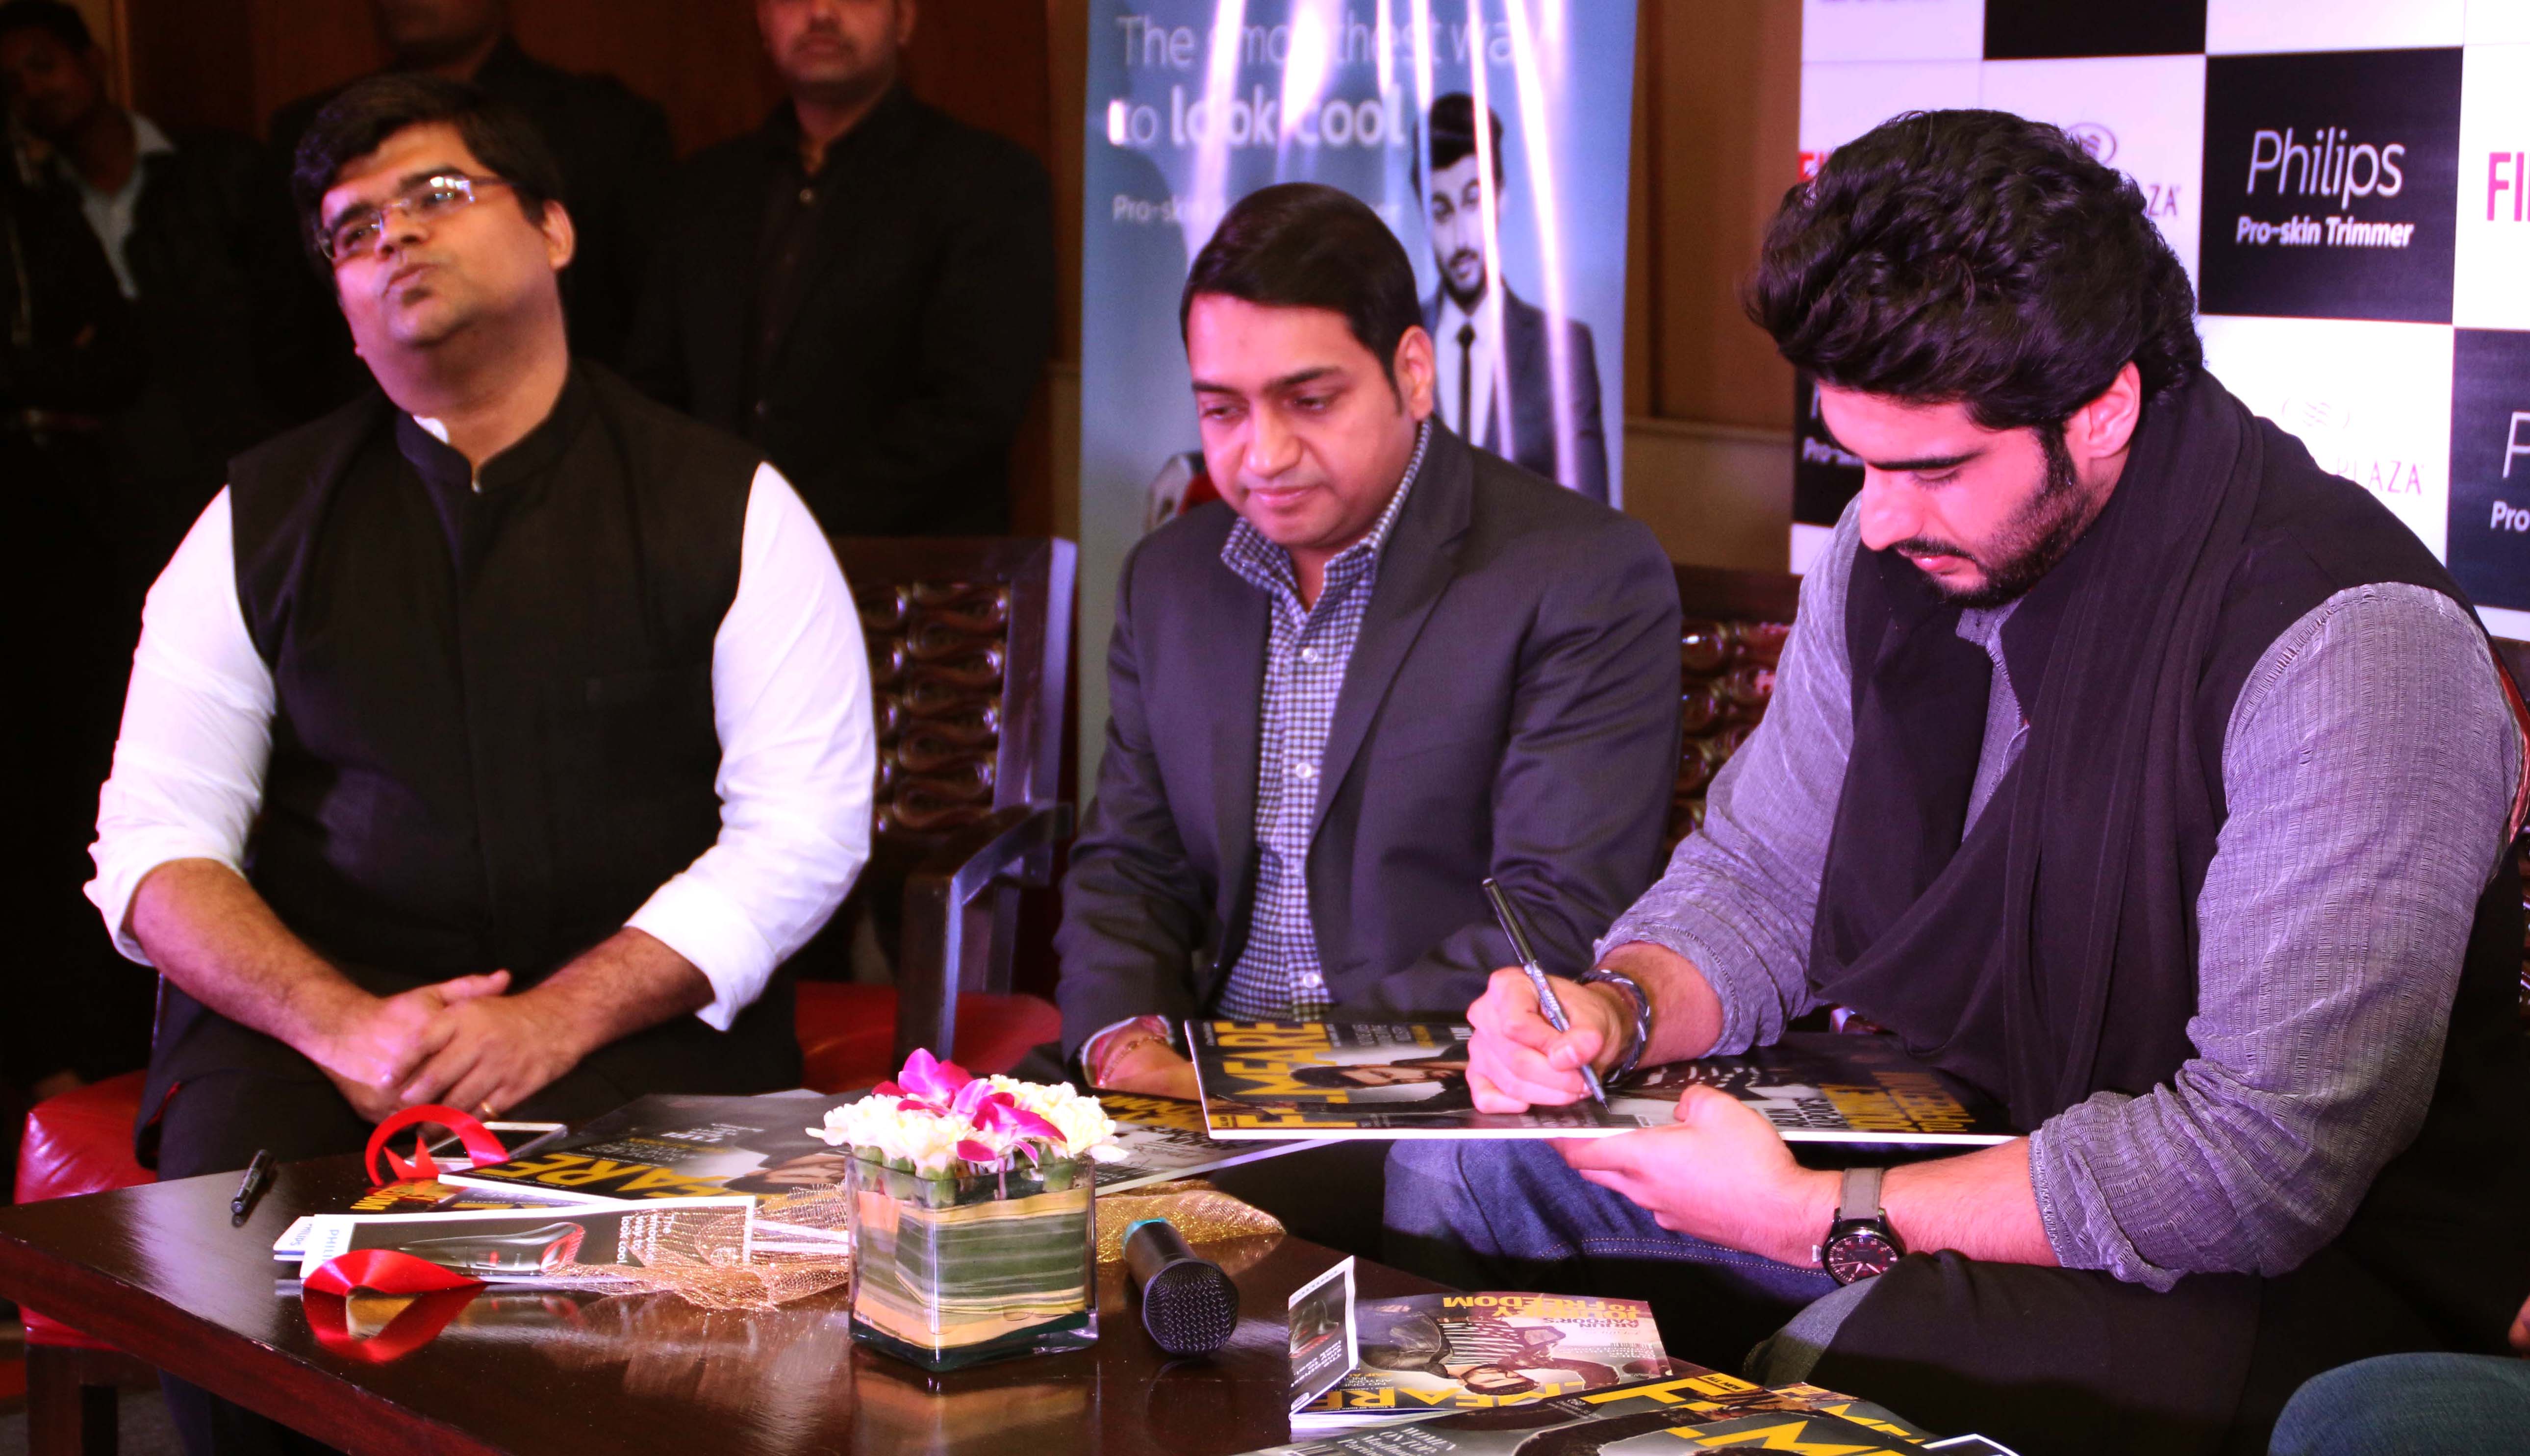 Arjun Kapoor Launches FilmFare 2014 Magazine